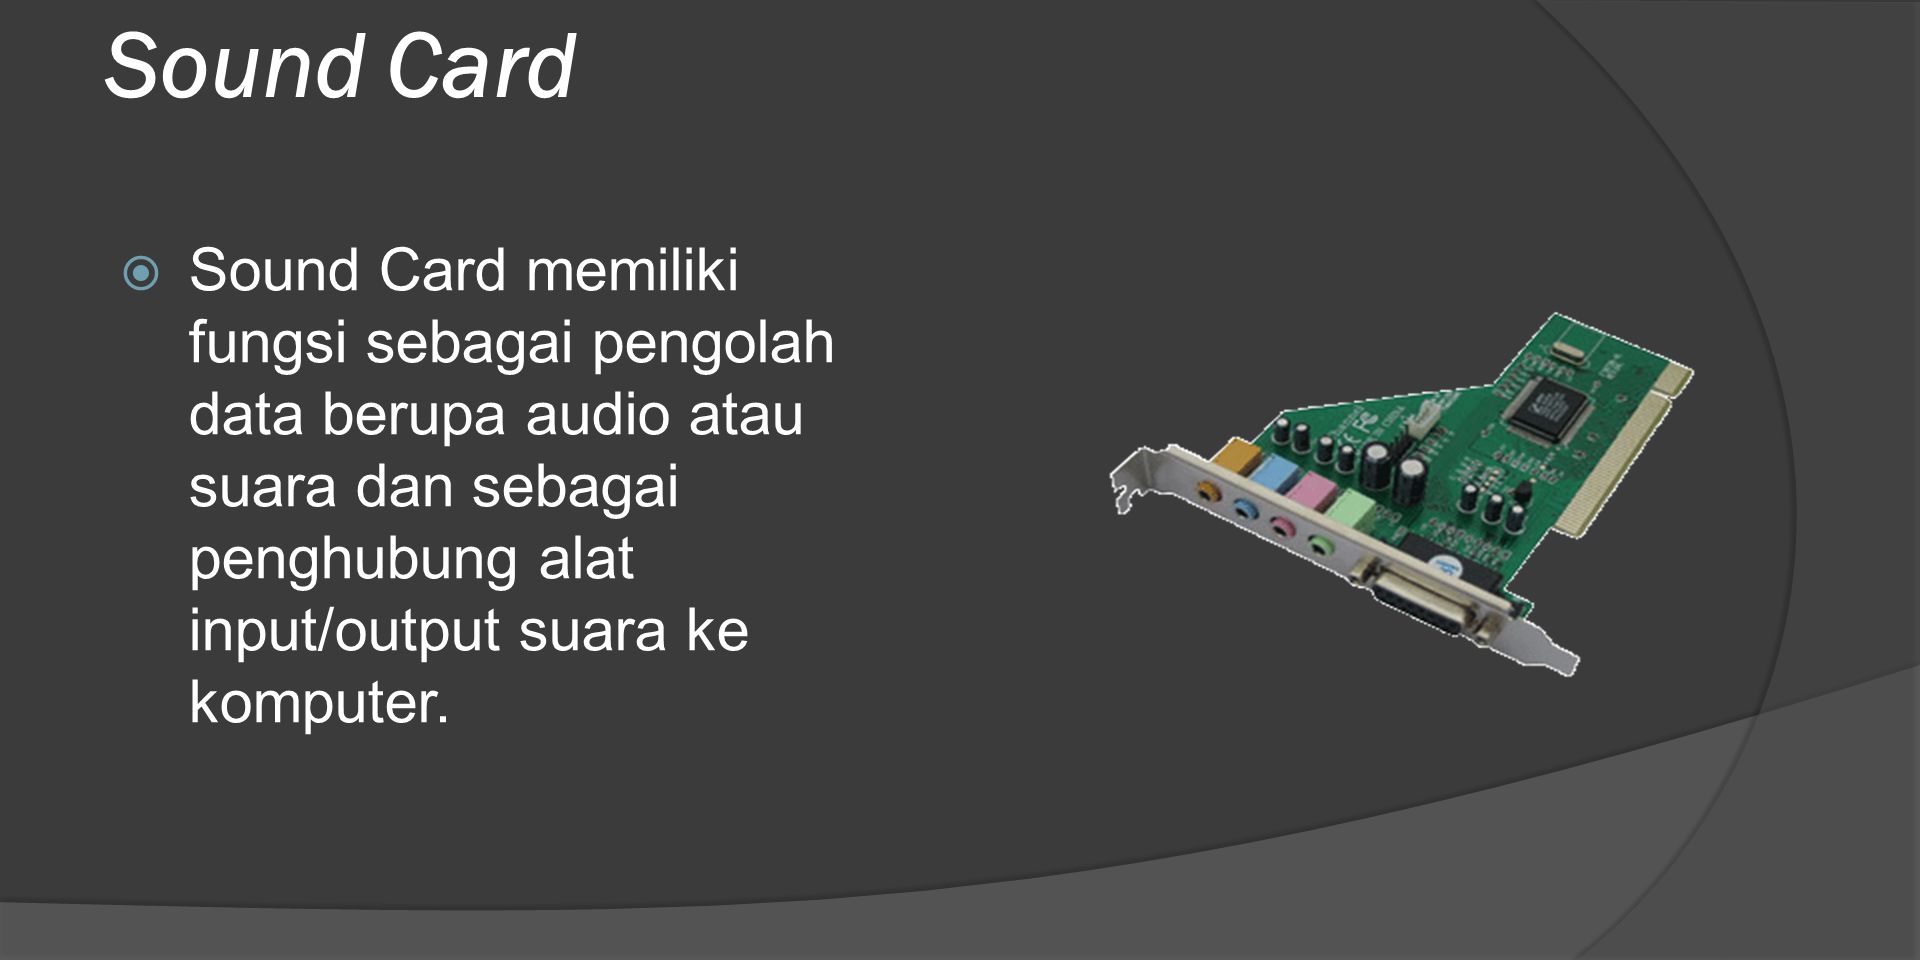 Sound Card Sound Card memiliki fungsi sebagai pengolah data berupa audio atau suara dan sebagai penghubung alat input/output suara ke komputer.